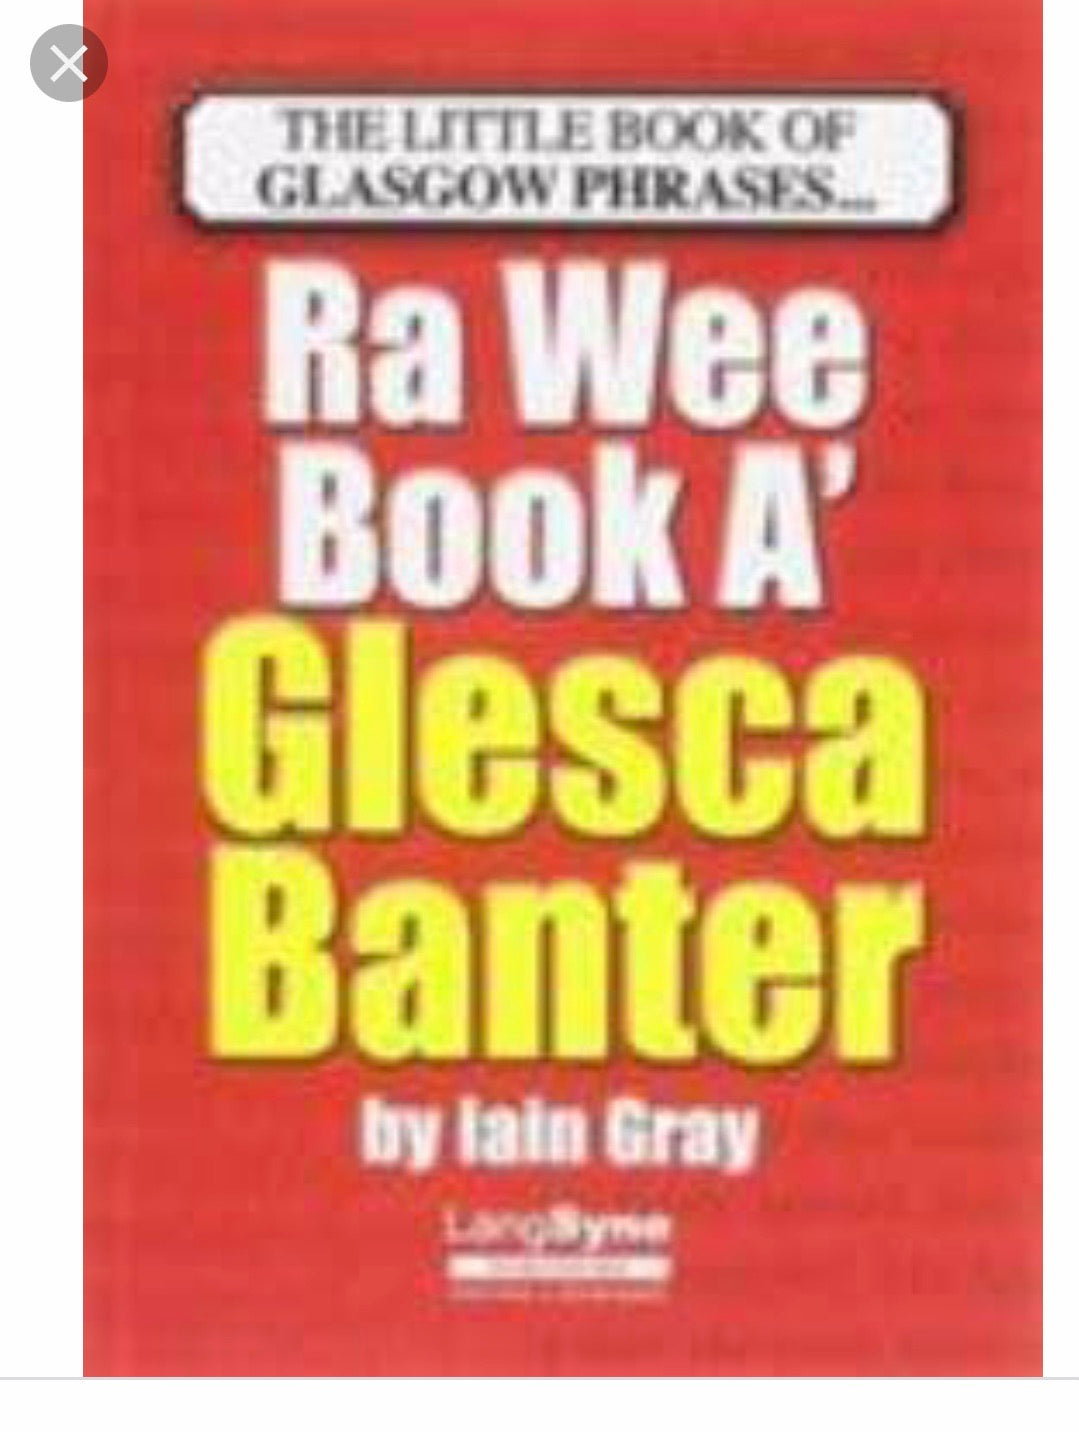 The Wee Book a Glesca Banter: An A-Z of Glasgow Phrases